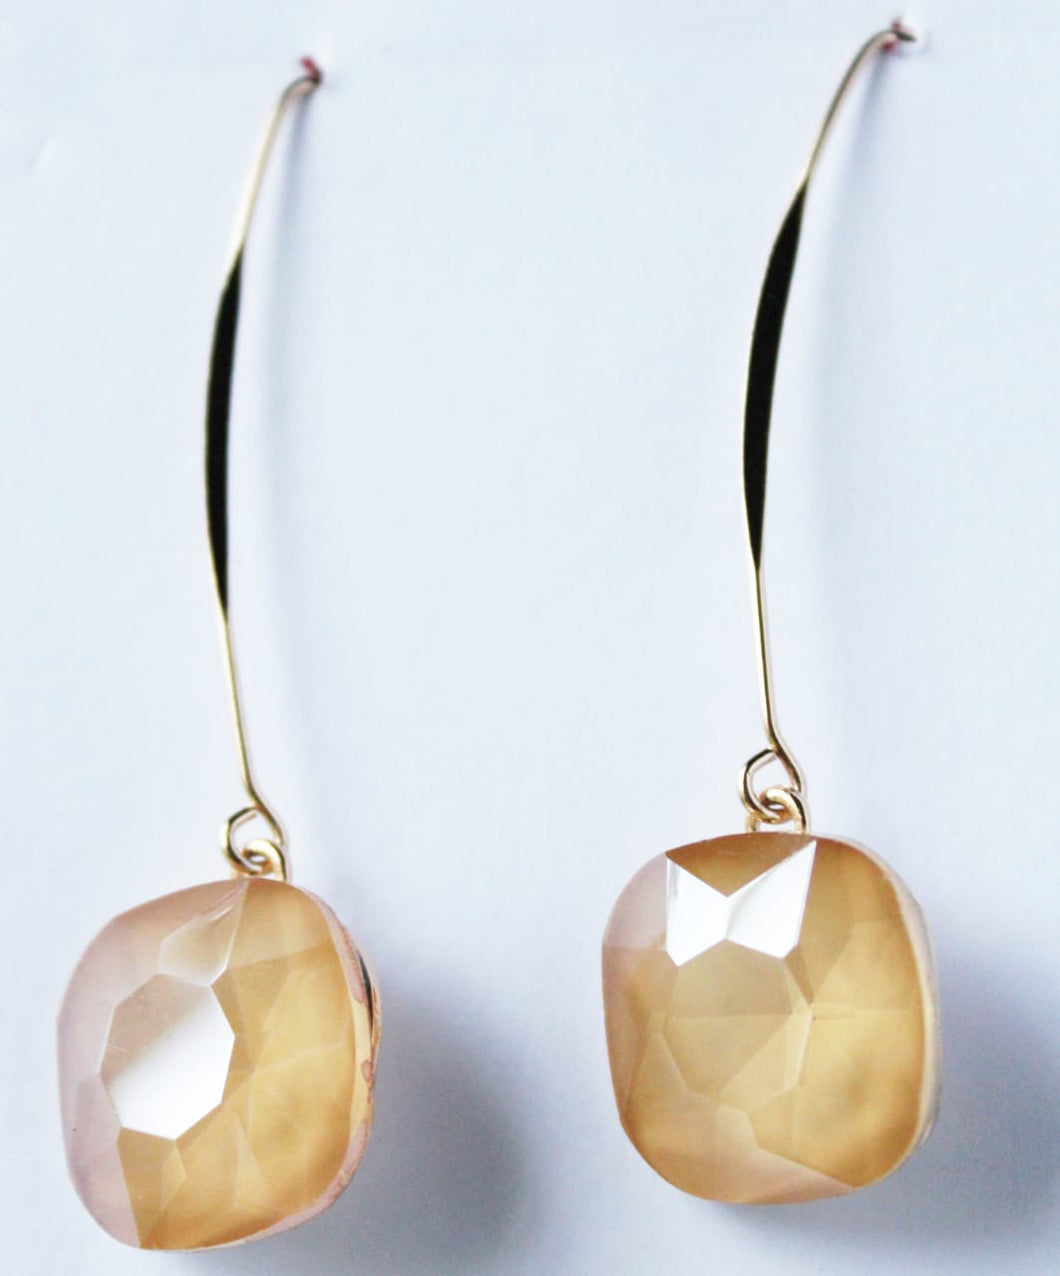 Gemzlane stone fashion danglers earrings